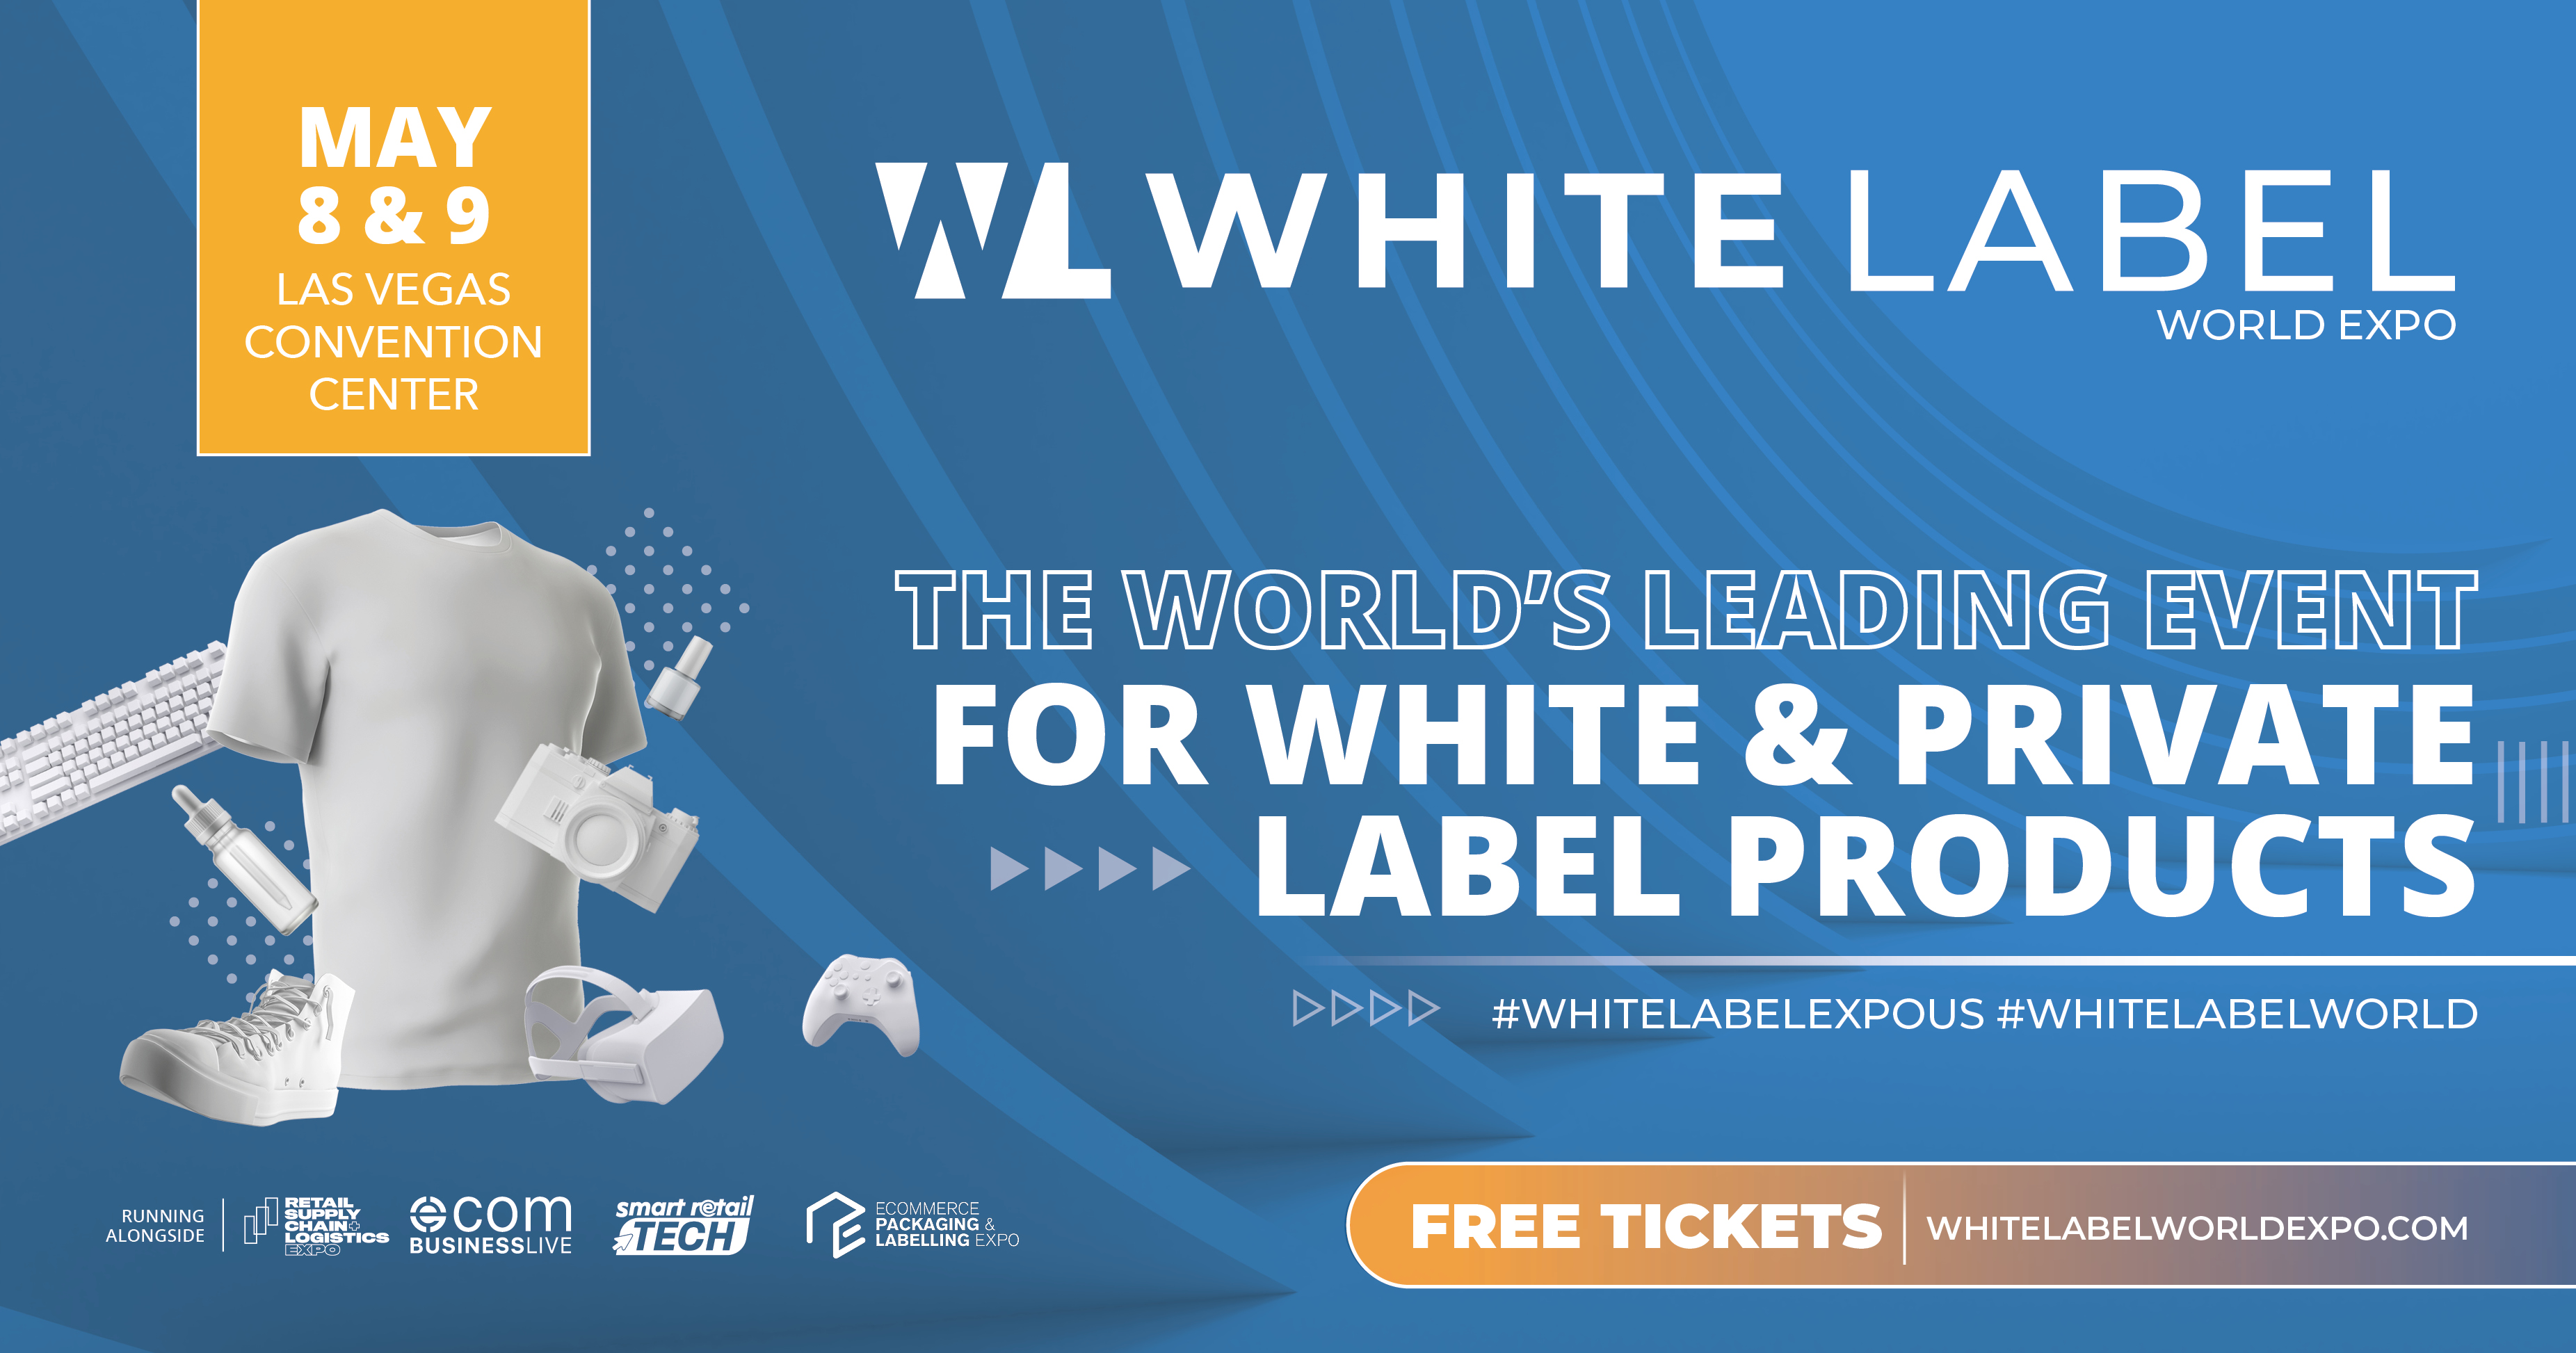 www.whitelabelexpo.com